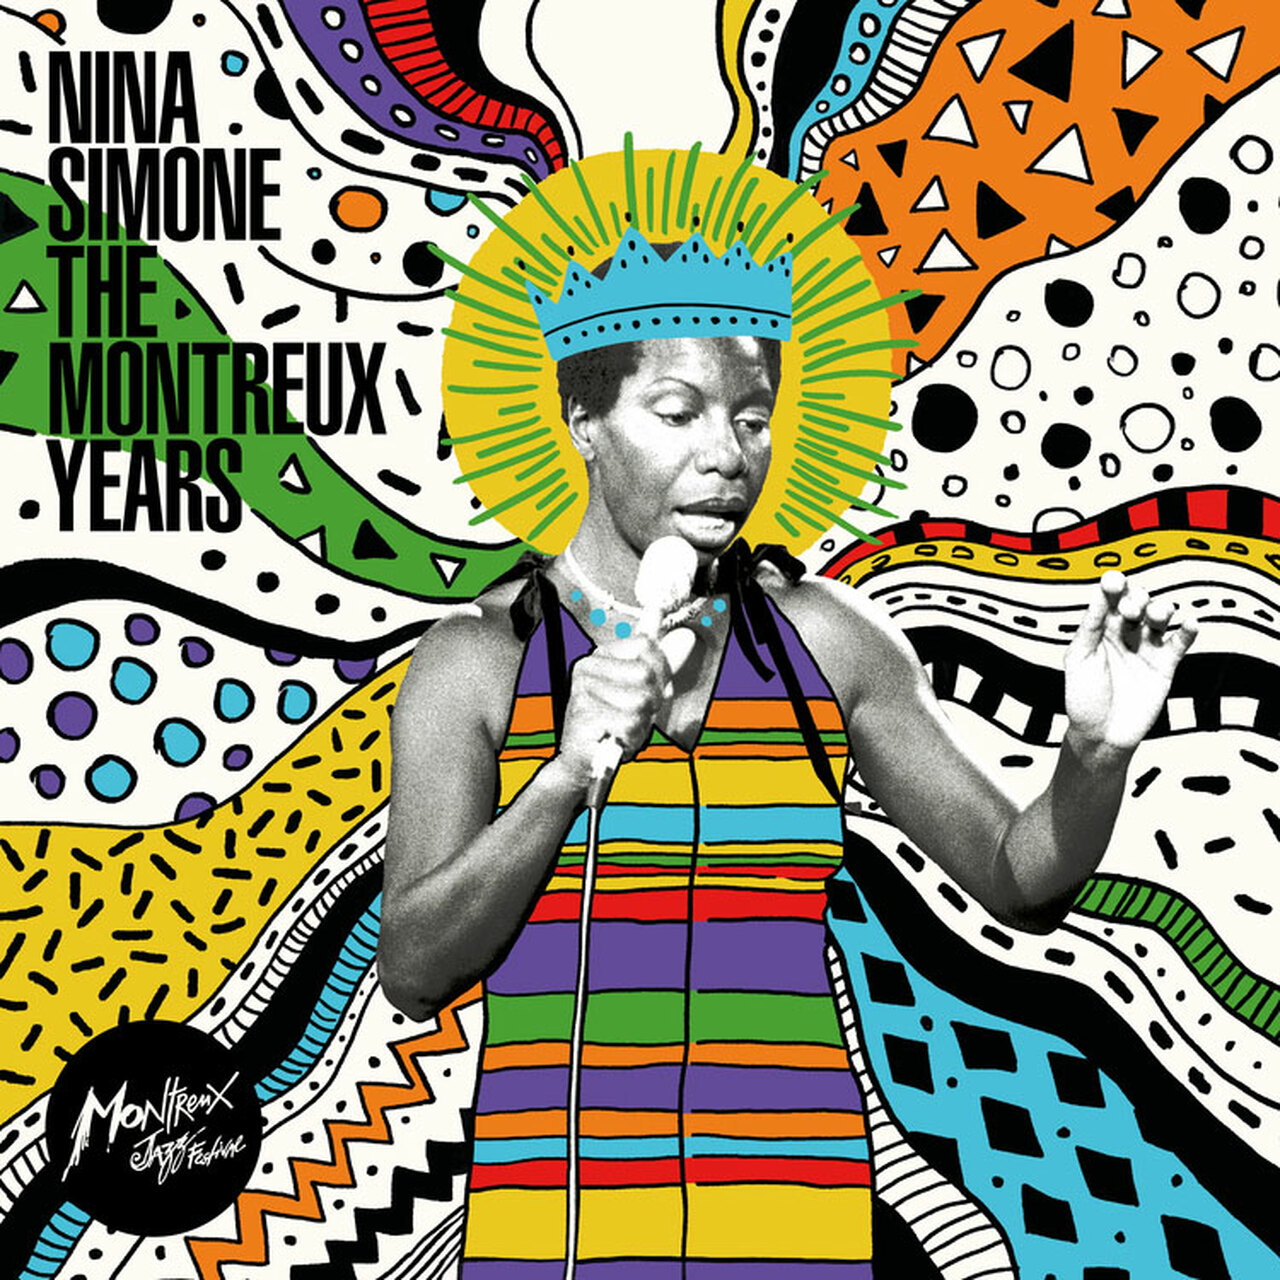 Nina Simone - The Montreux years (180gm Yellow/Turquoise colour vinyl)